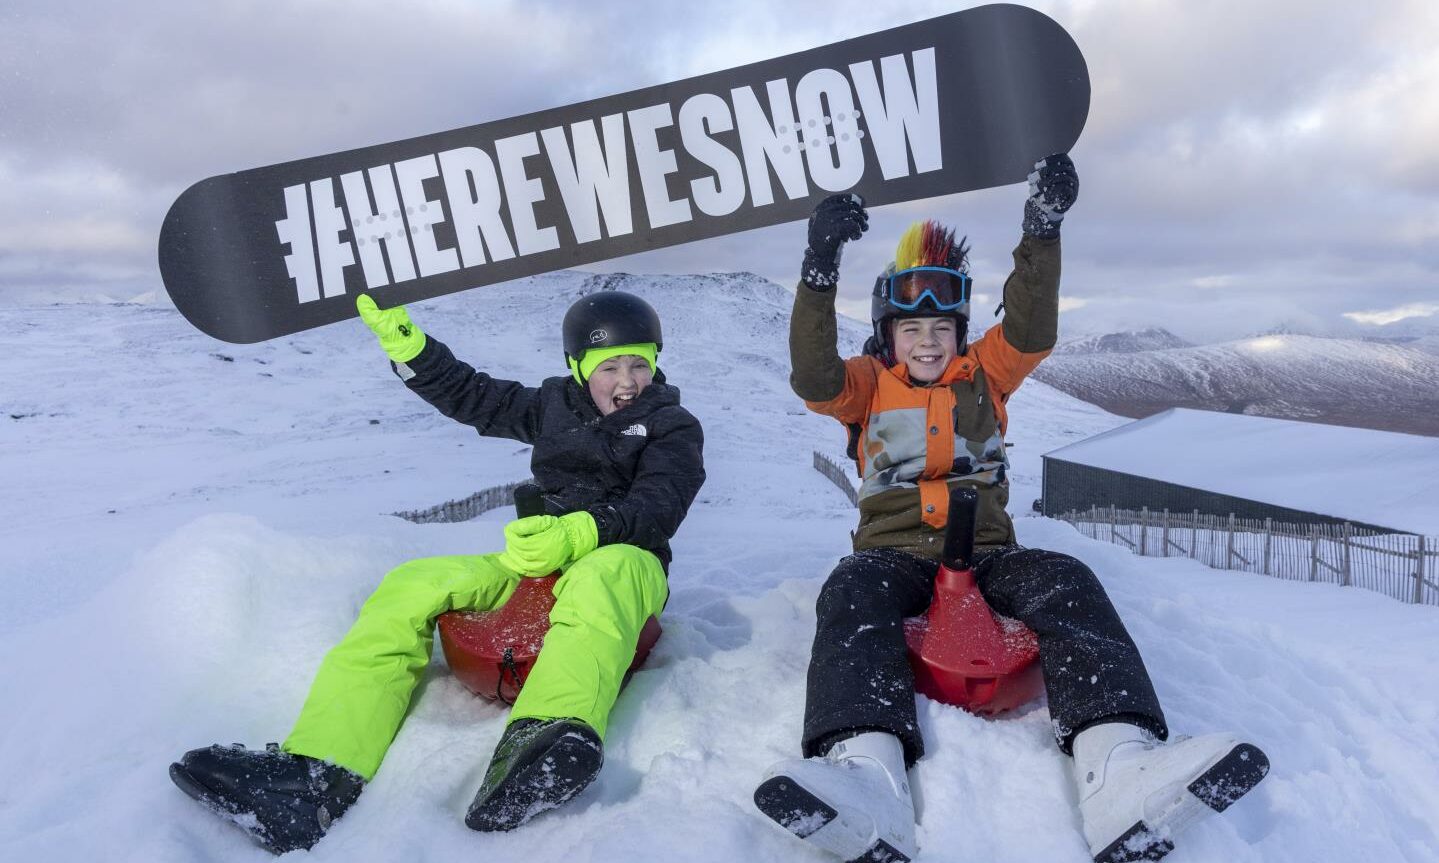 Ben Joshua and Kody Cumming at Glencoe ski centre holding snowboard saying Here We Snow.